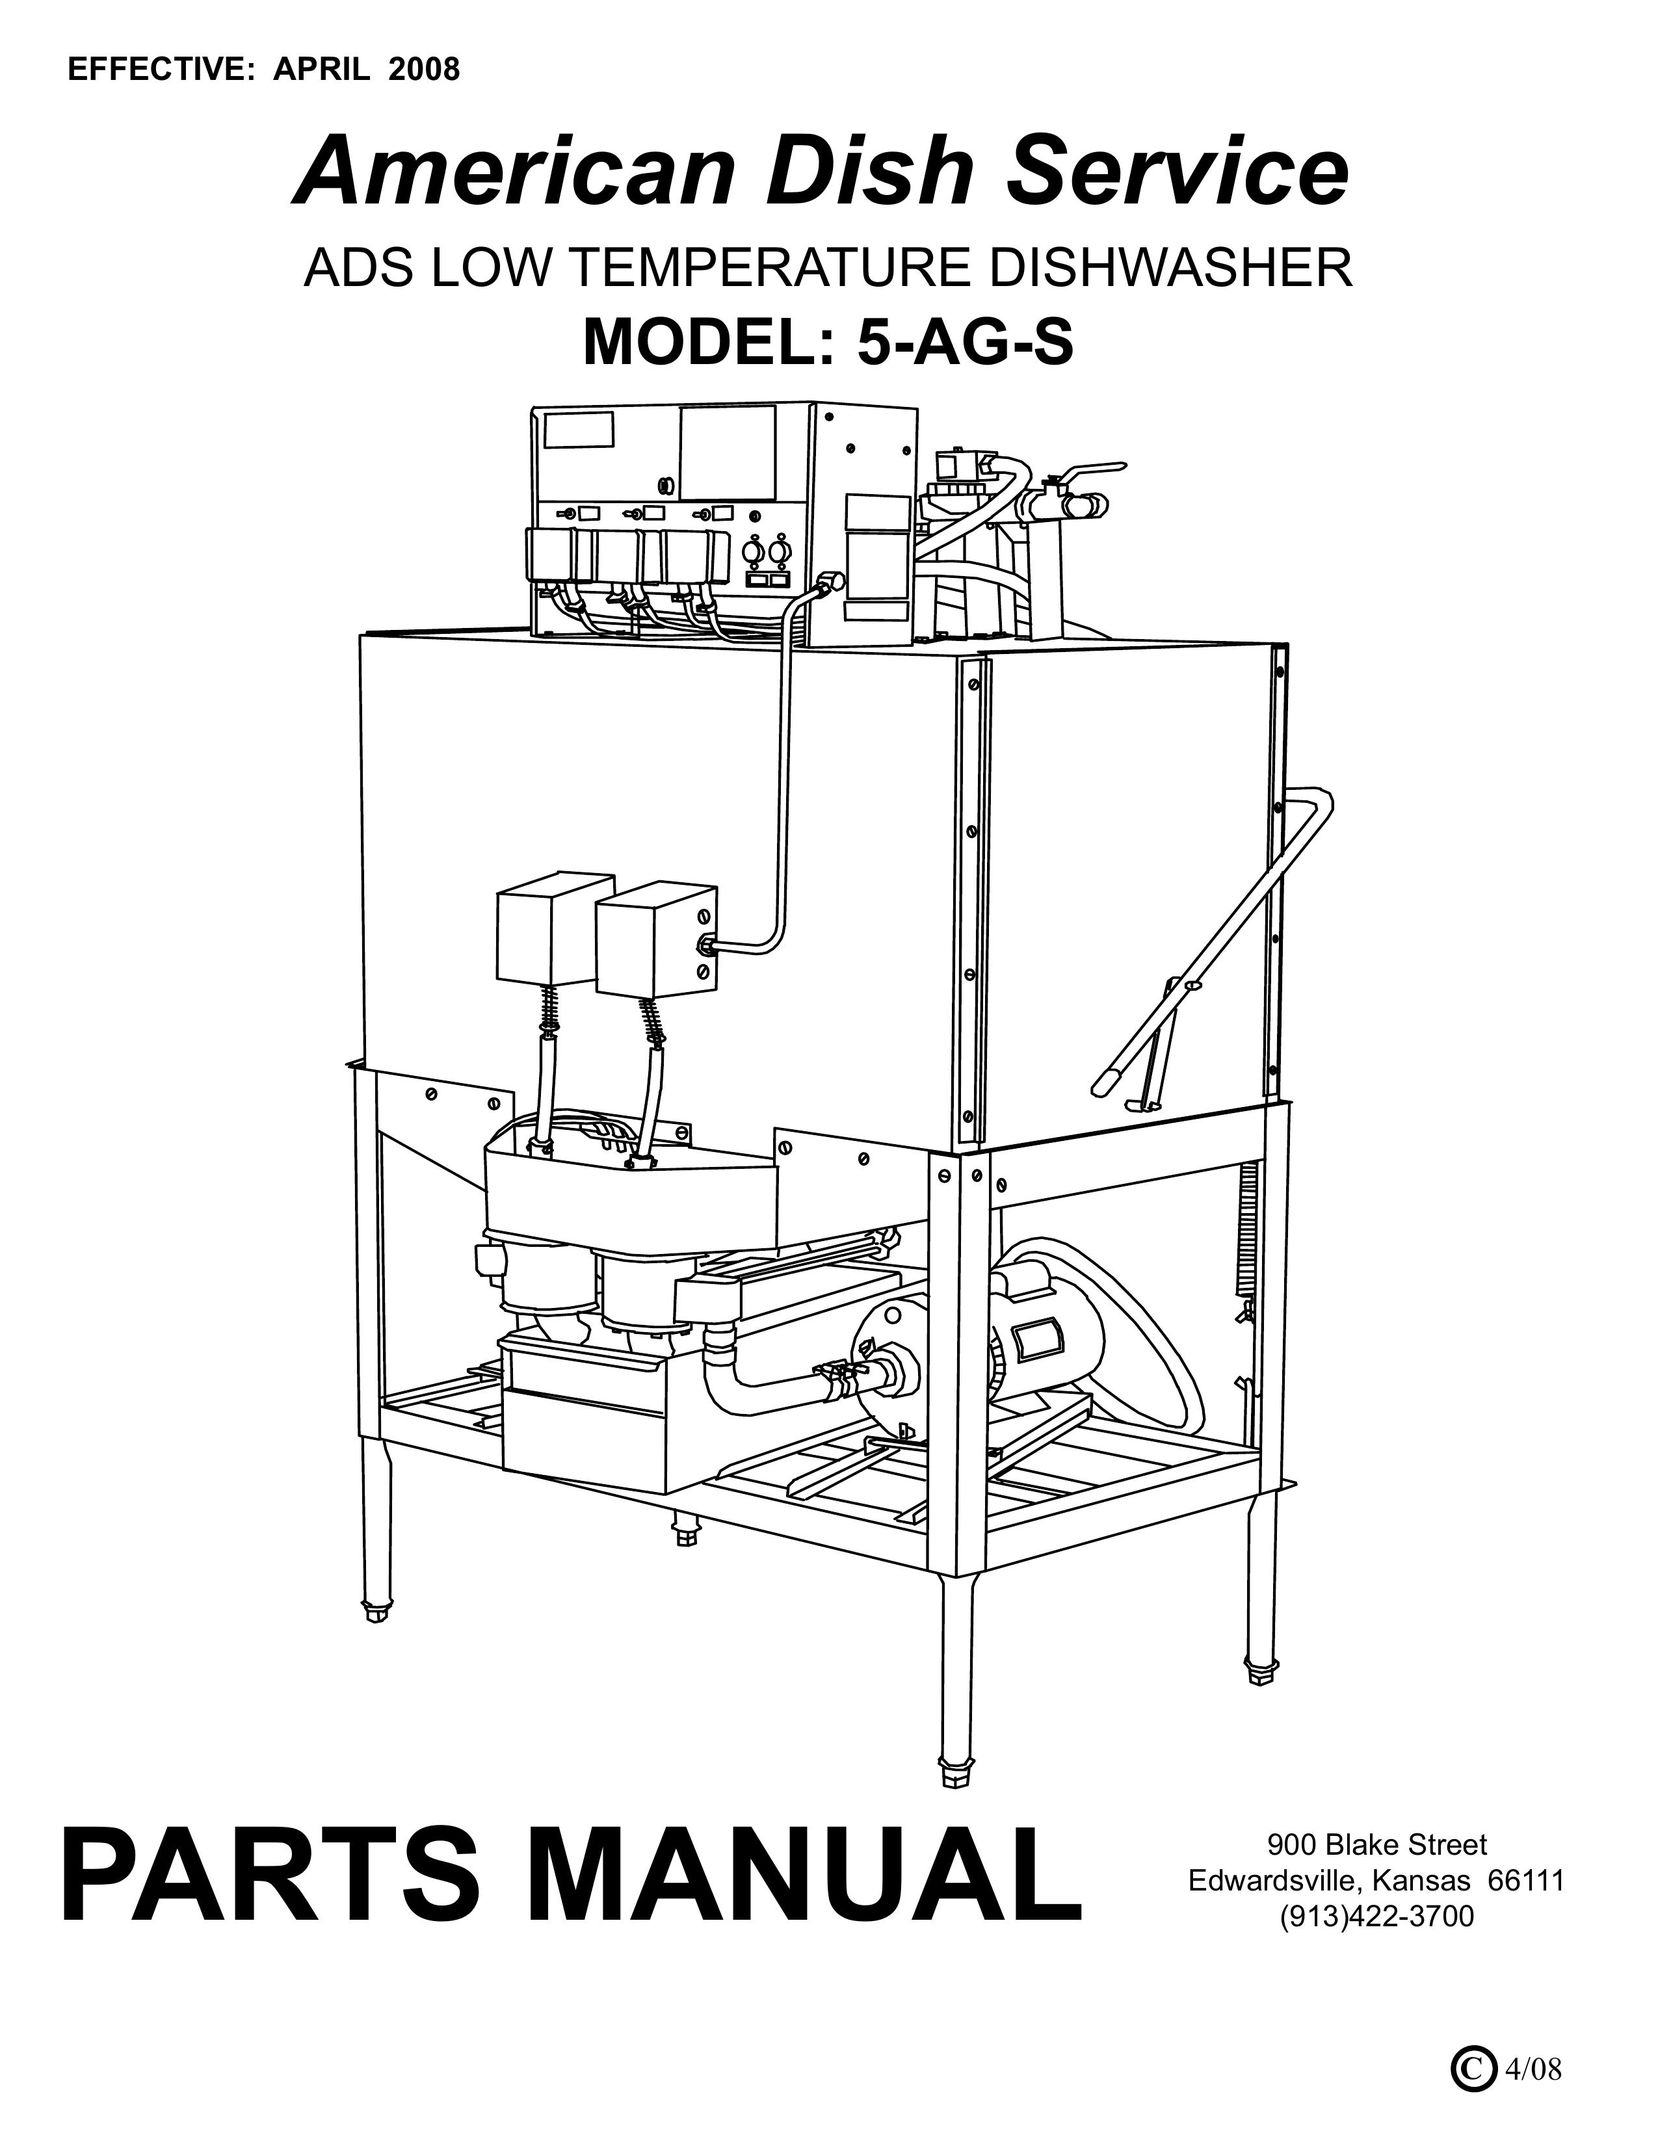 American Dish Service 5-AG-S Dishwasher User Manual